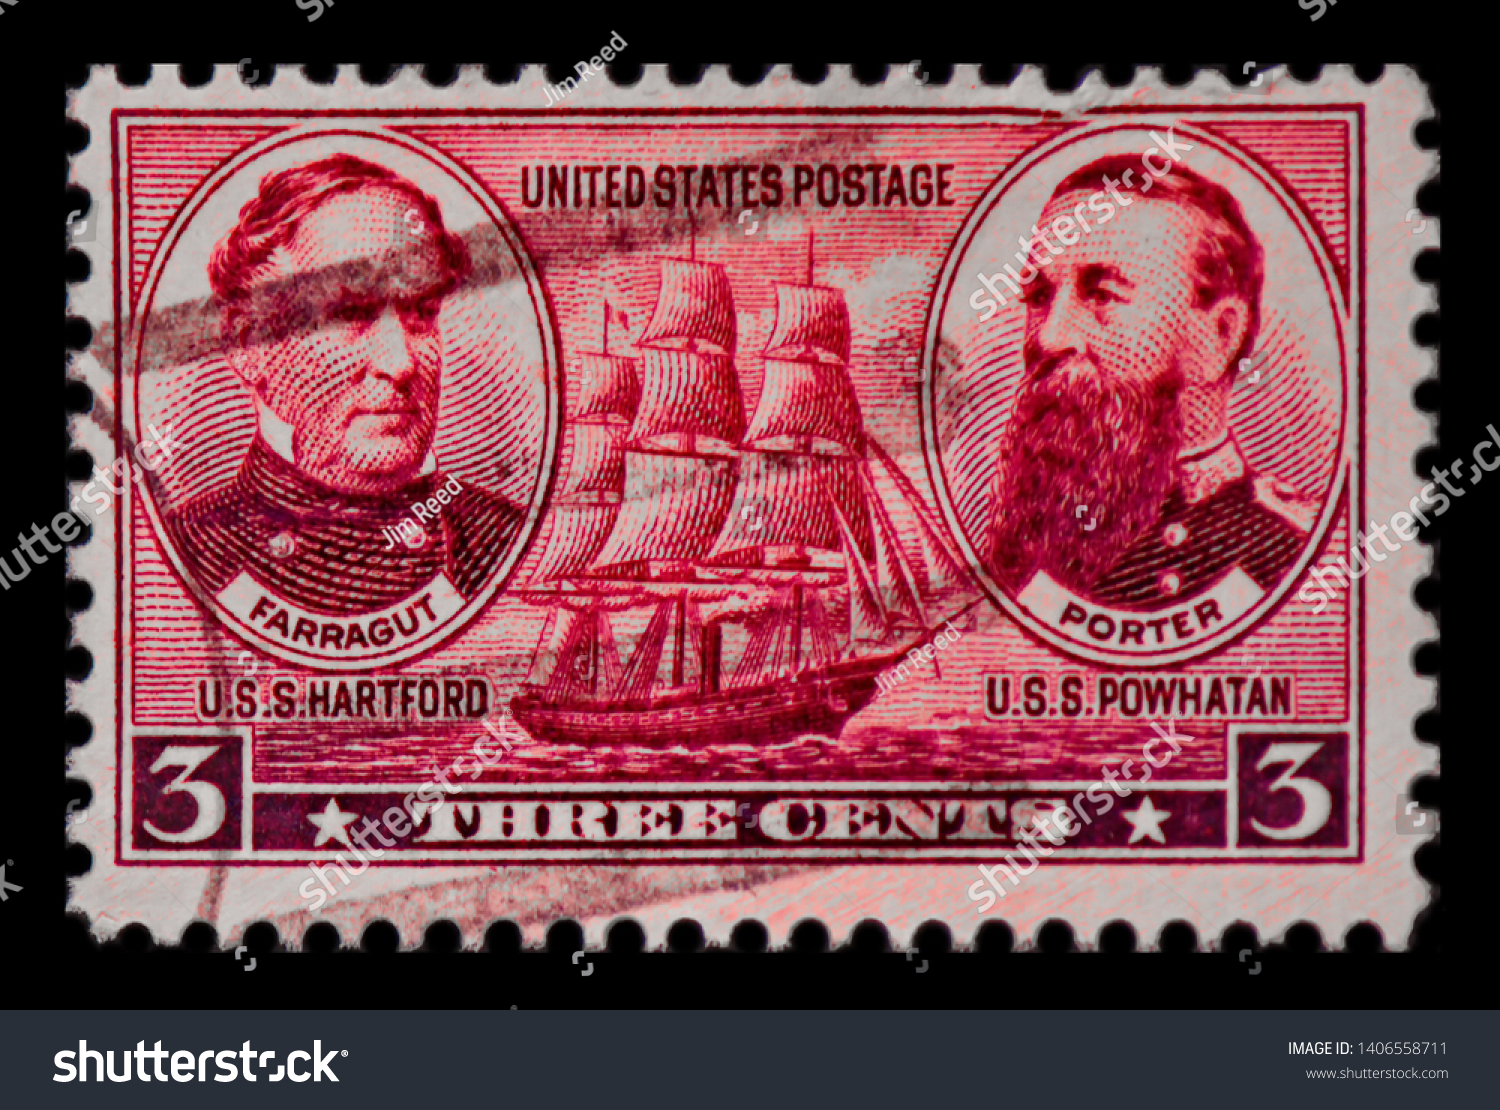 Farragut & Porter Set of 4 x 3 Cent US Postage Stamps NEW Scot 792 